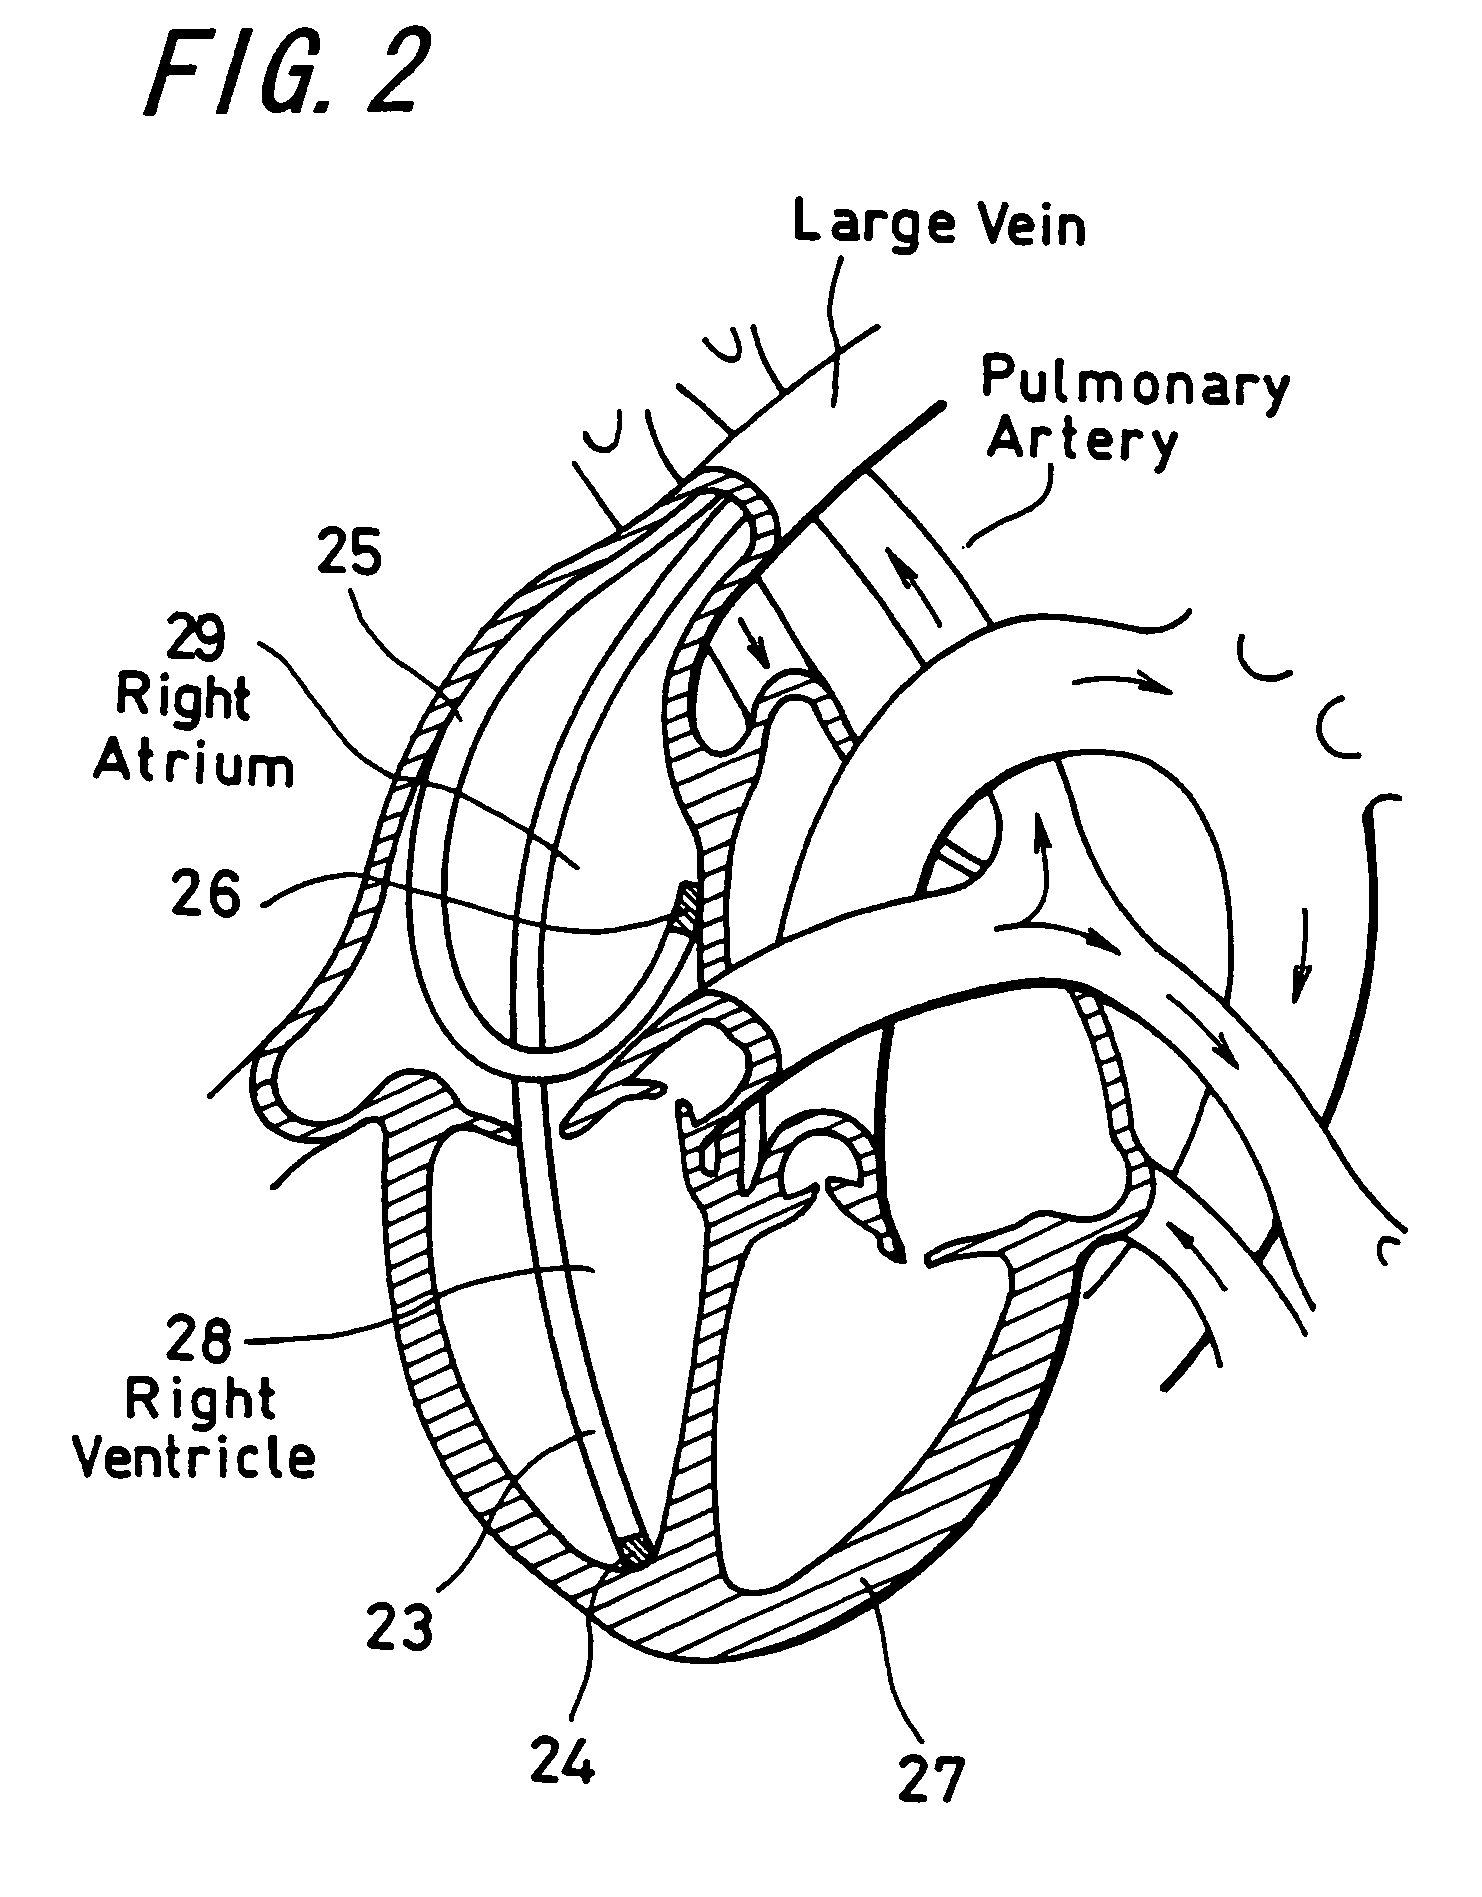 Heart treatment equipment and heart treatment method